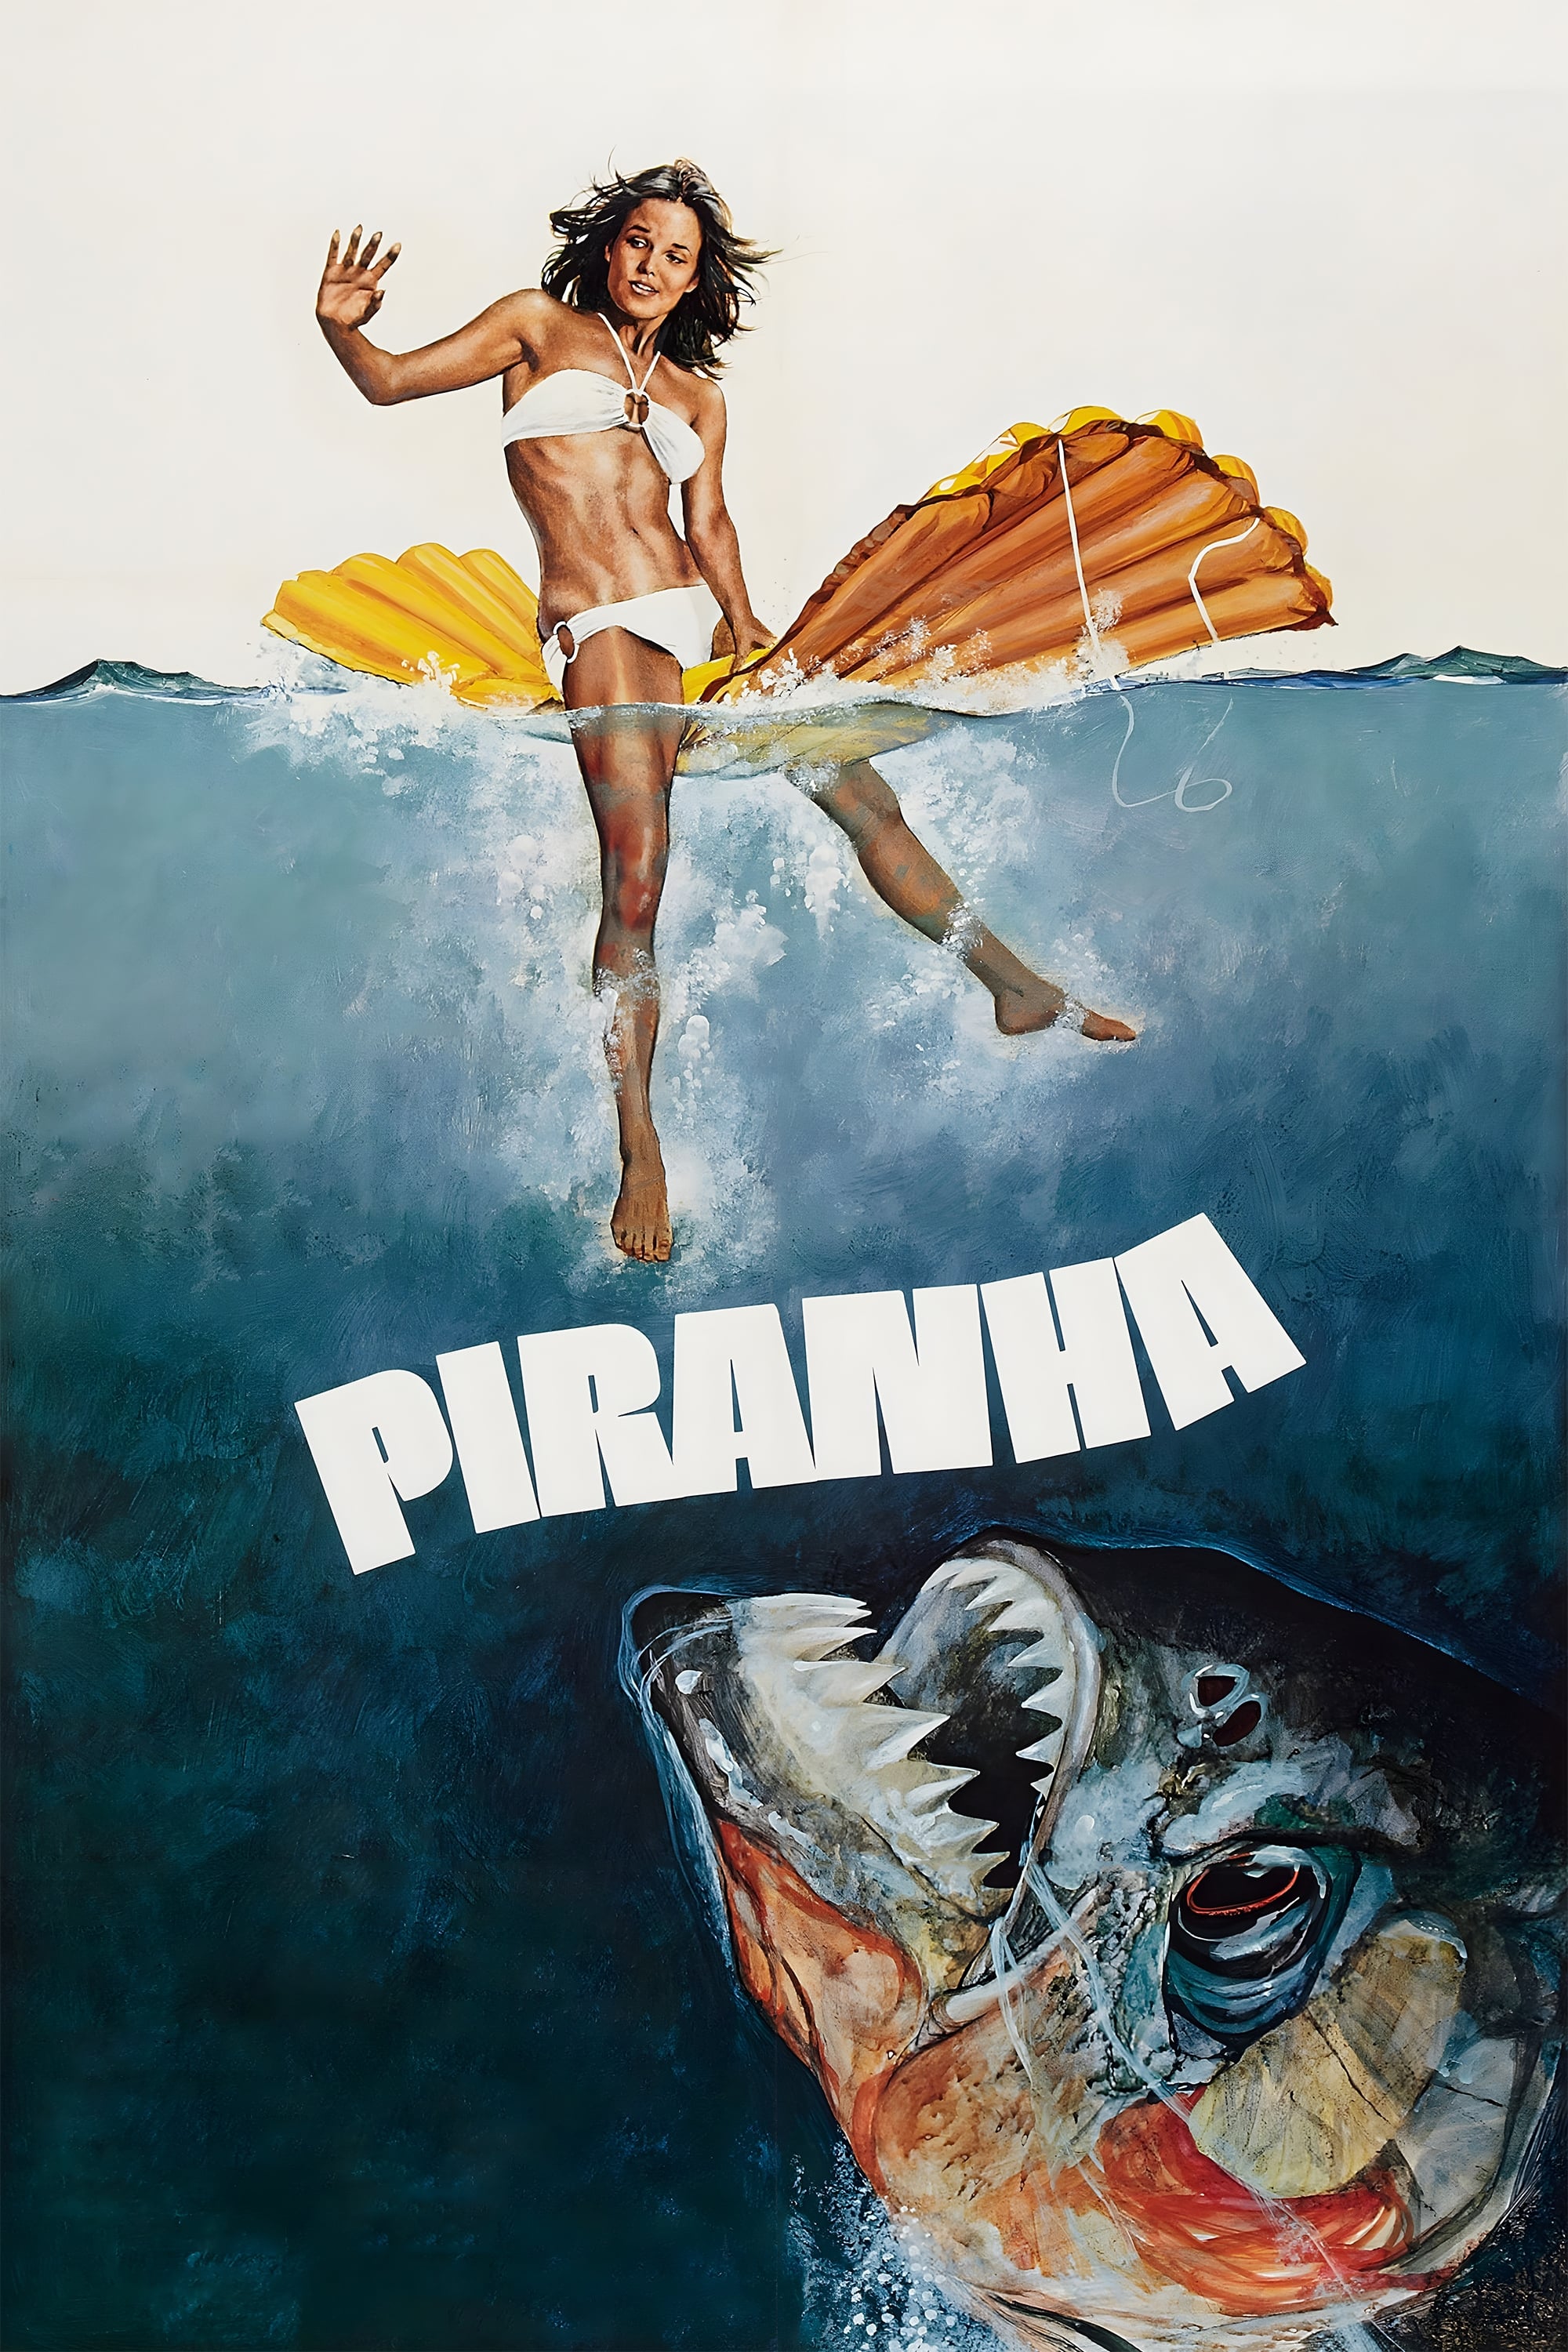 Piranha (1978)